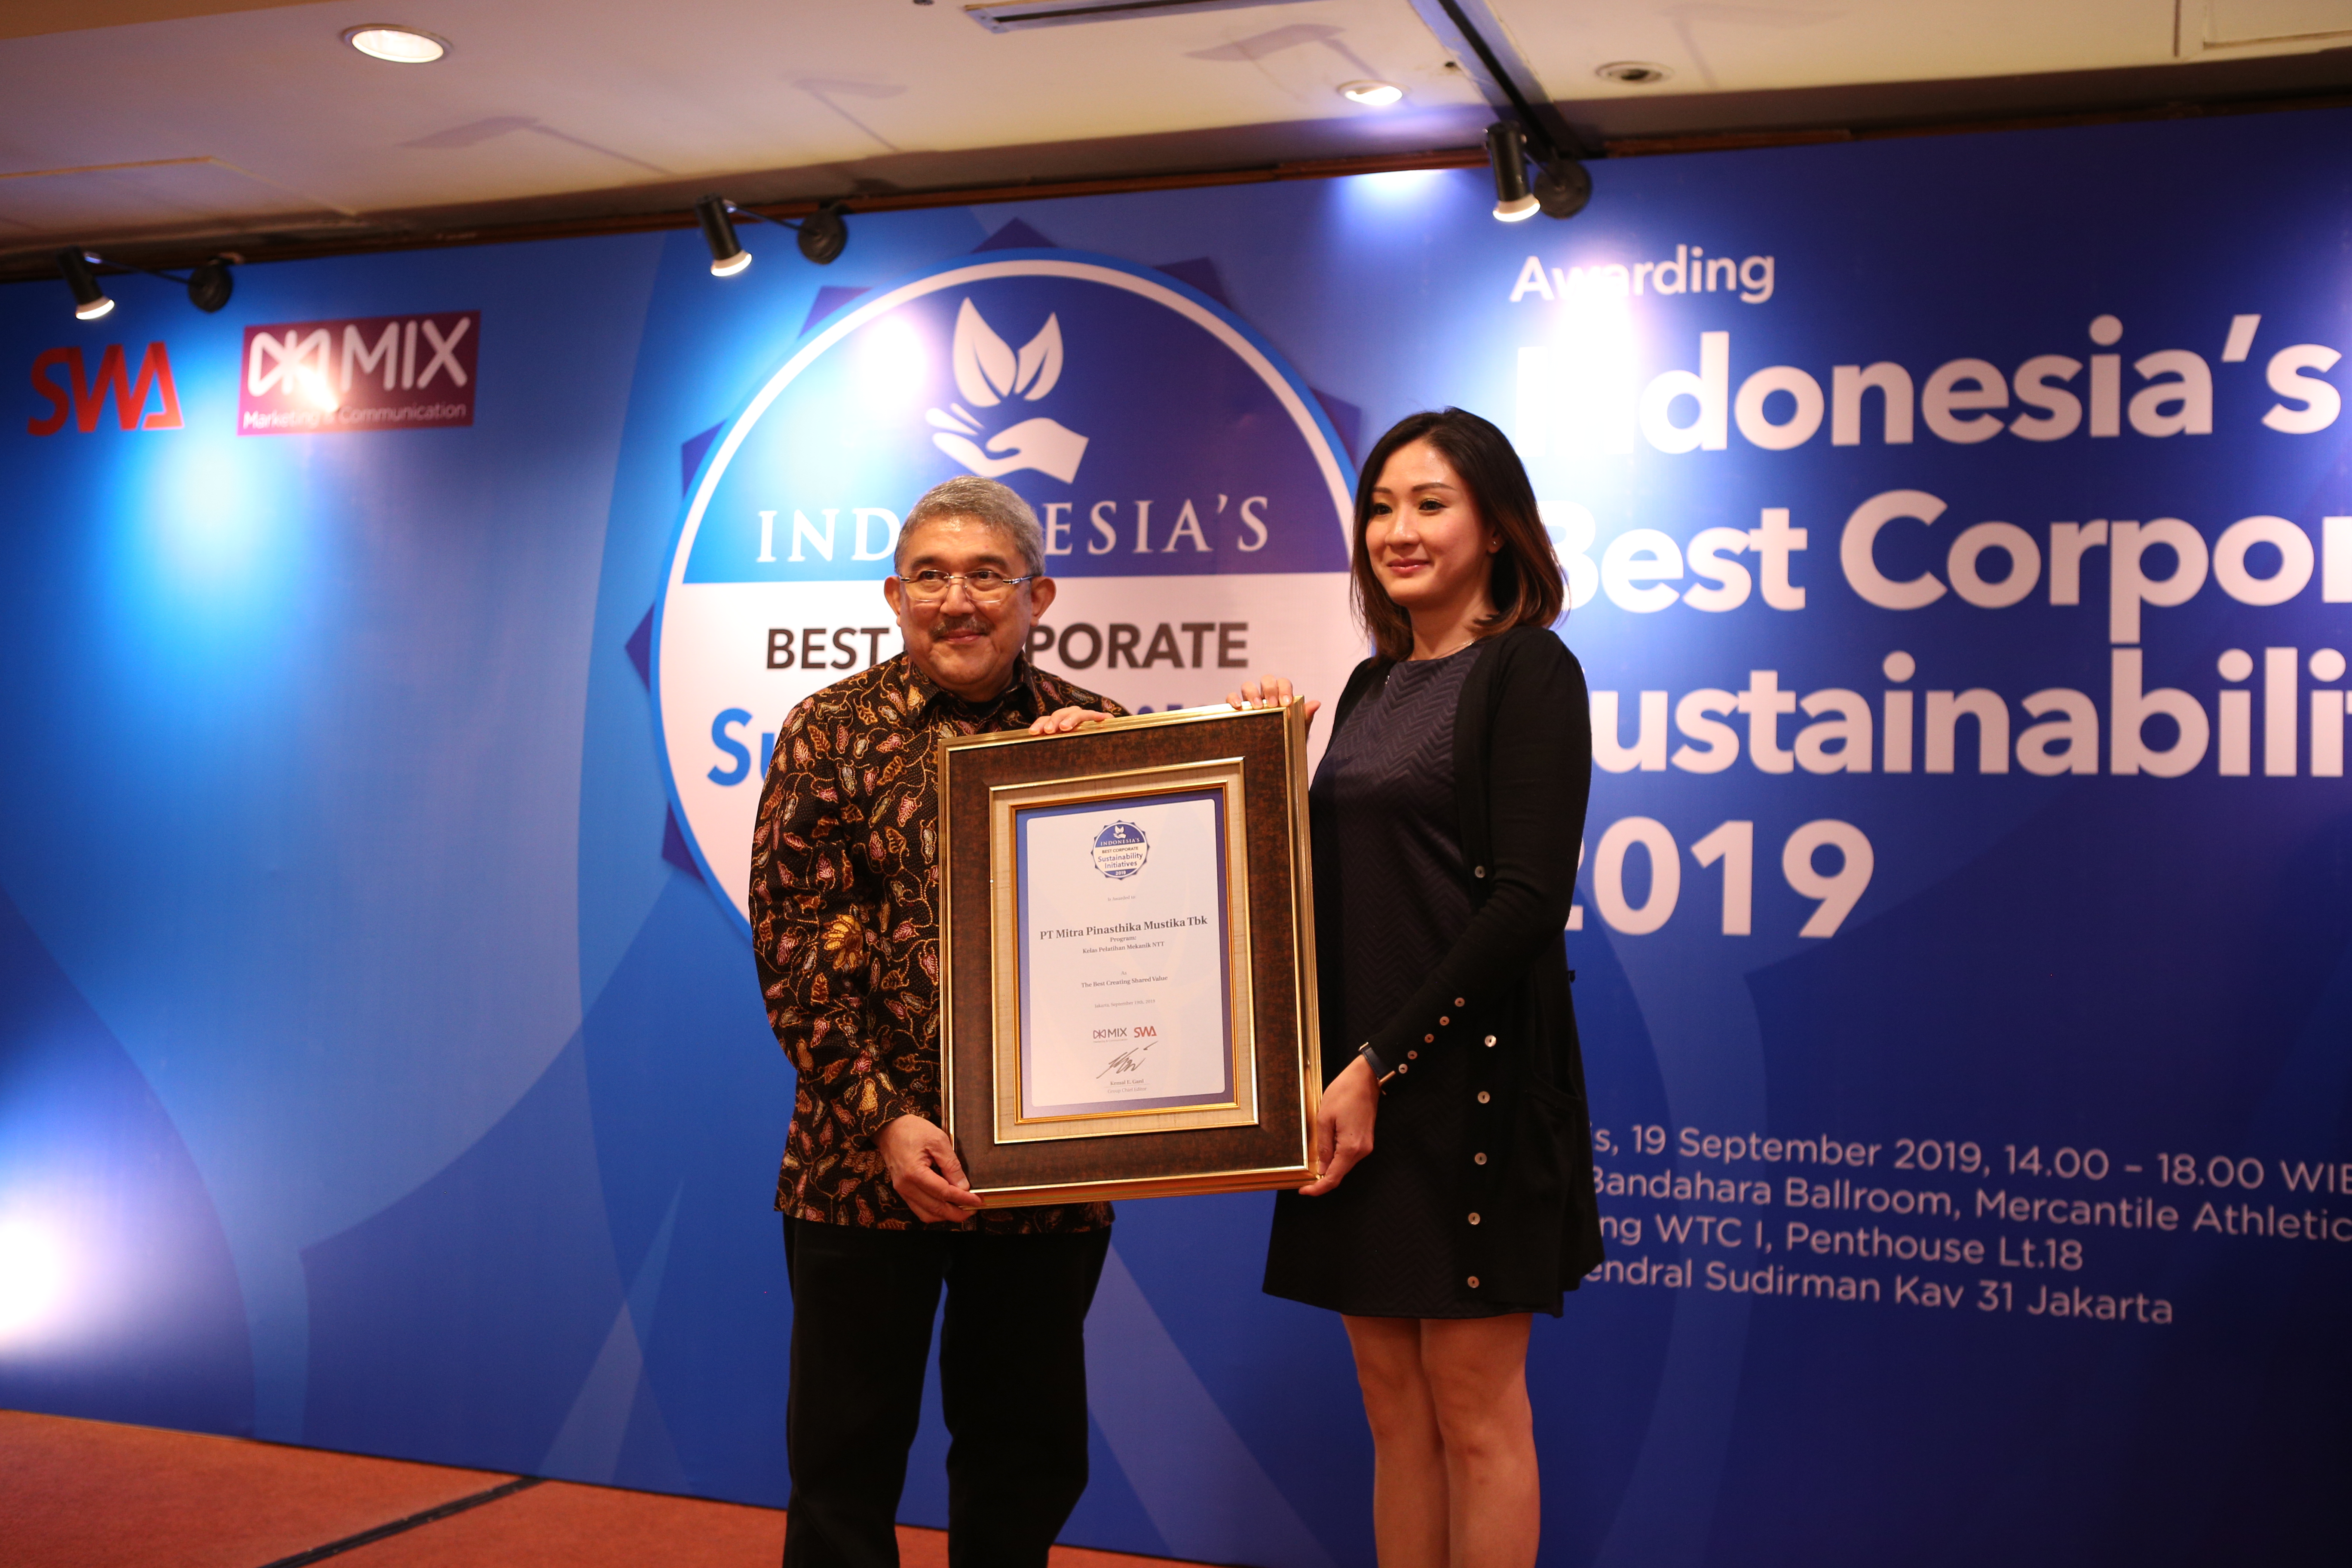 MPMX Won Indonesia's Best Corporate Social Initiative Award 2019 - Best Creating Shared Value